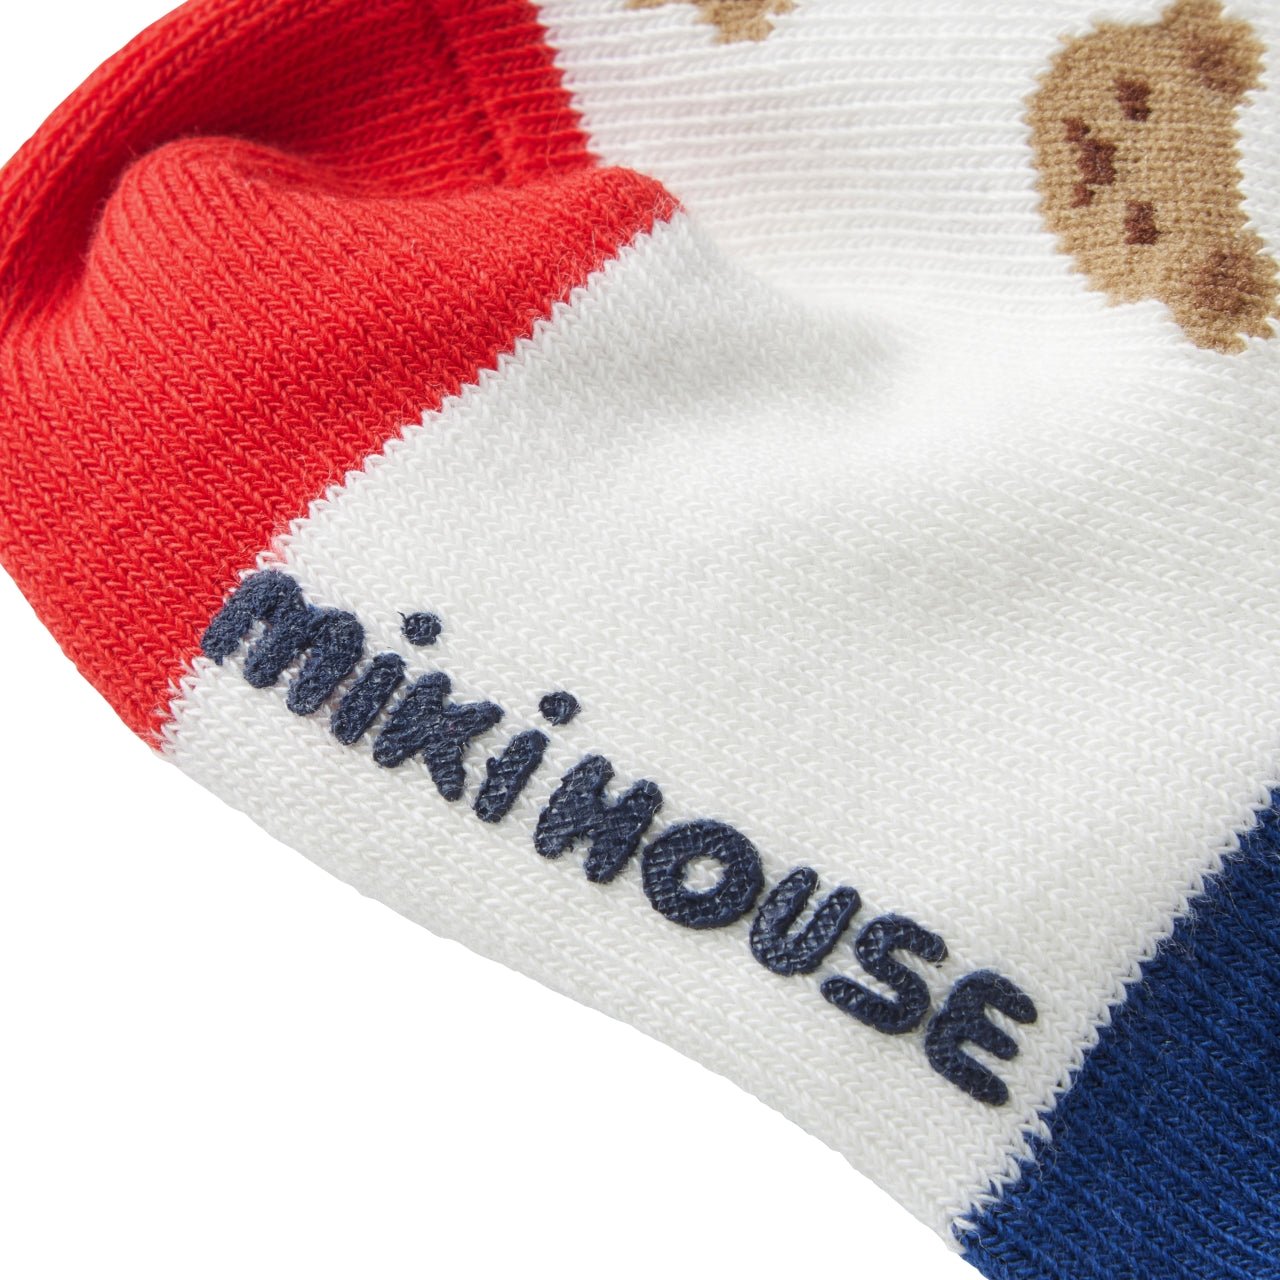 Short Socks - MIKI HOUSE USA